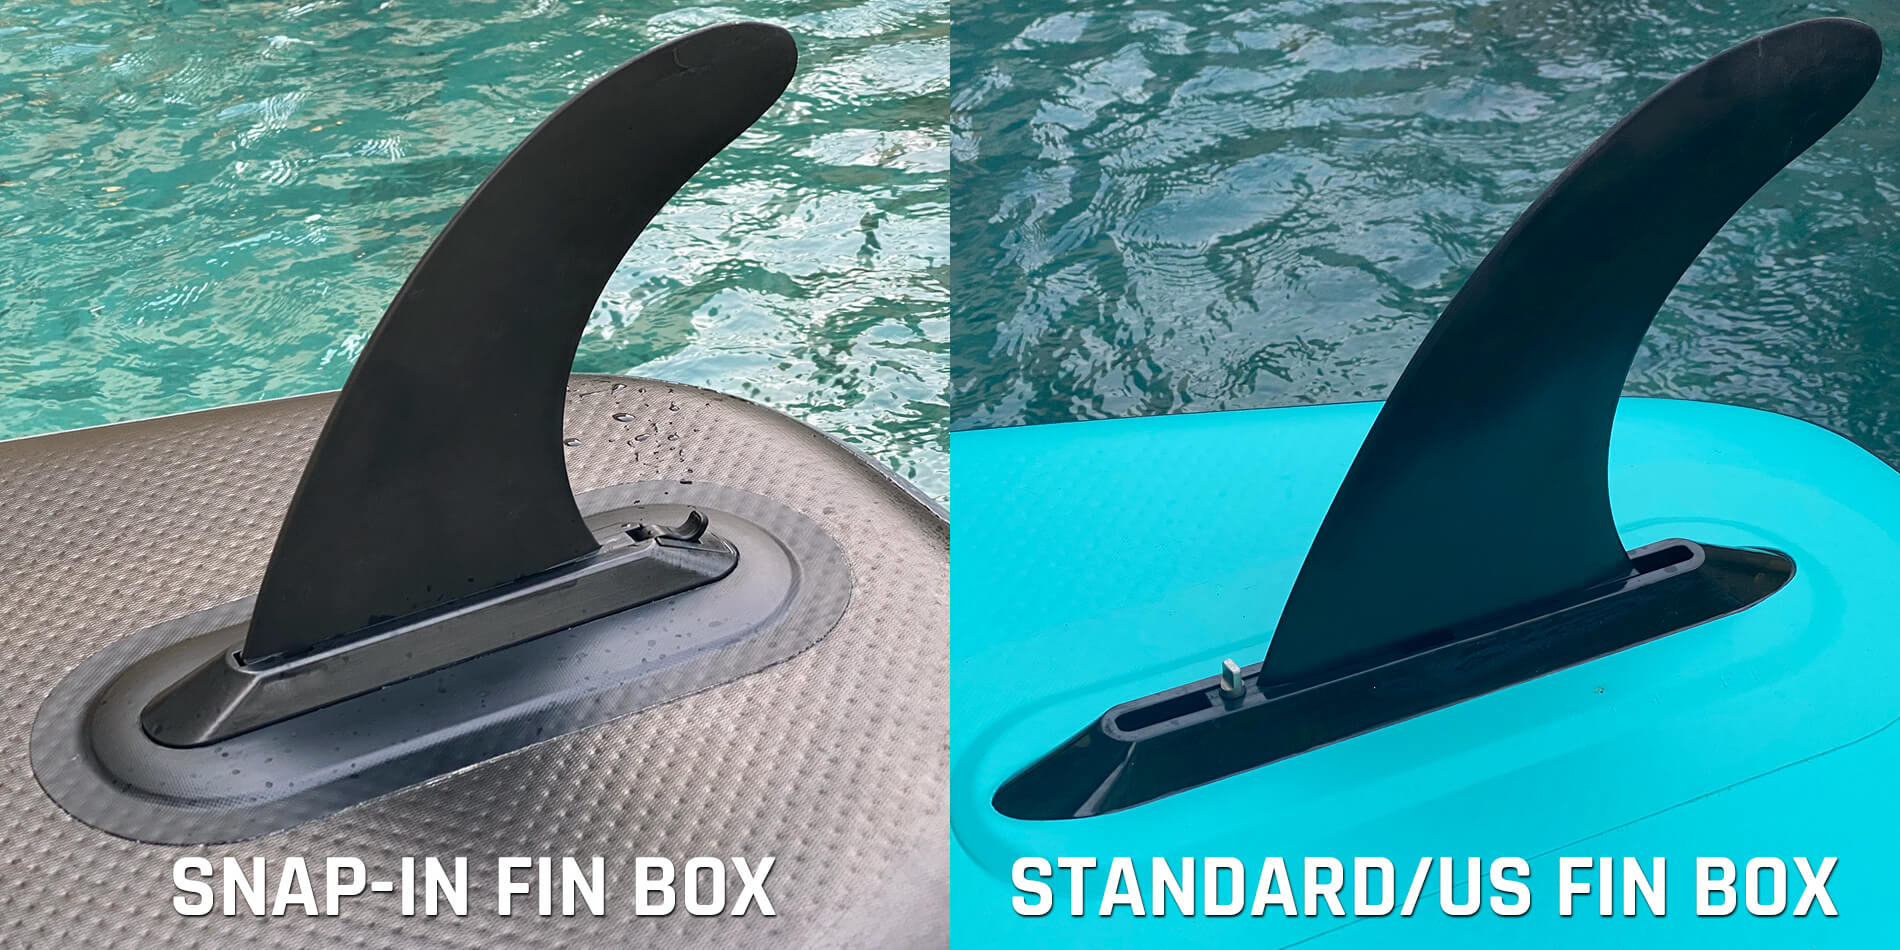 Snap in Fin box vs Standard US Fin box